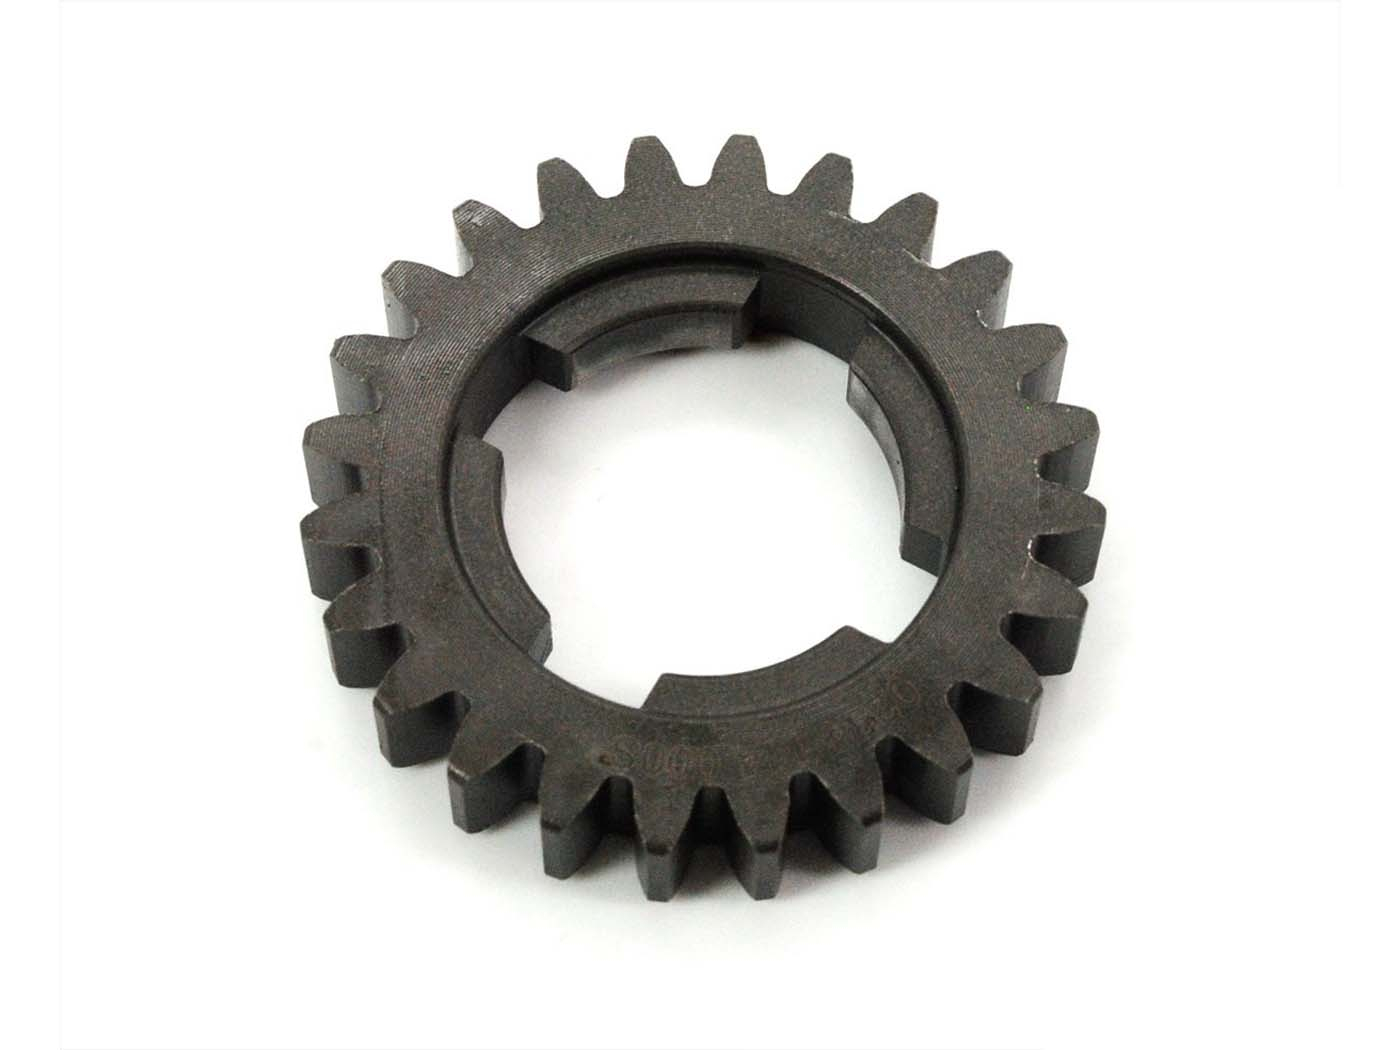 Gear Wheel Gearbox Outer Diameter 46mm Inner Diameter 23/29mm Wide 9mm For Hercules, DKW, Miele, Rixe